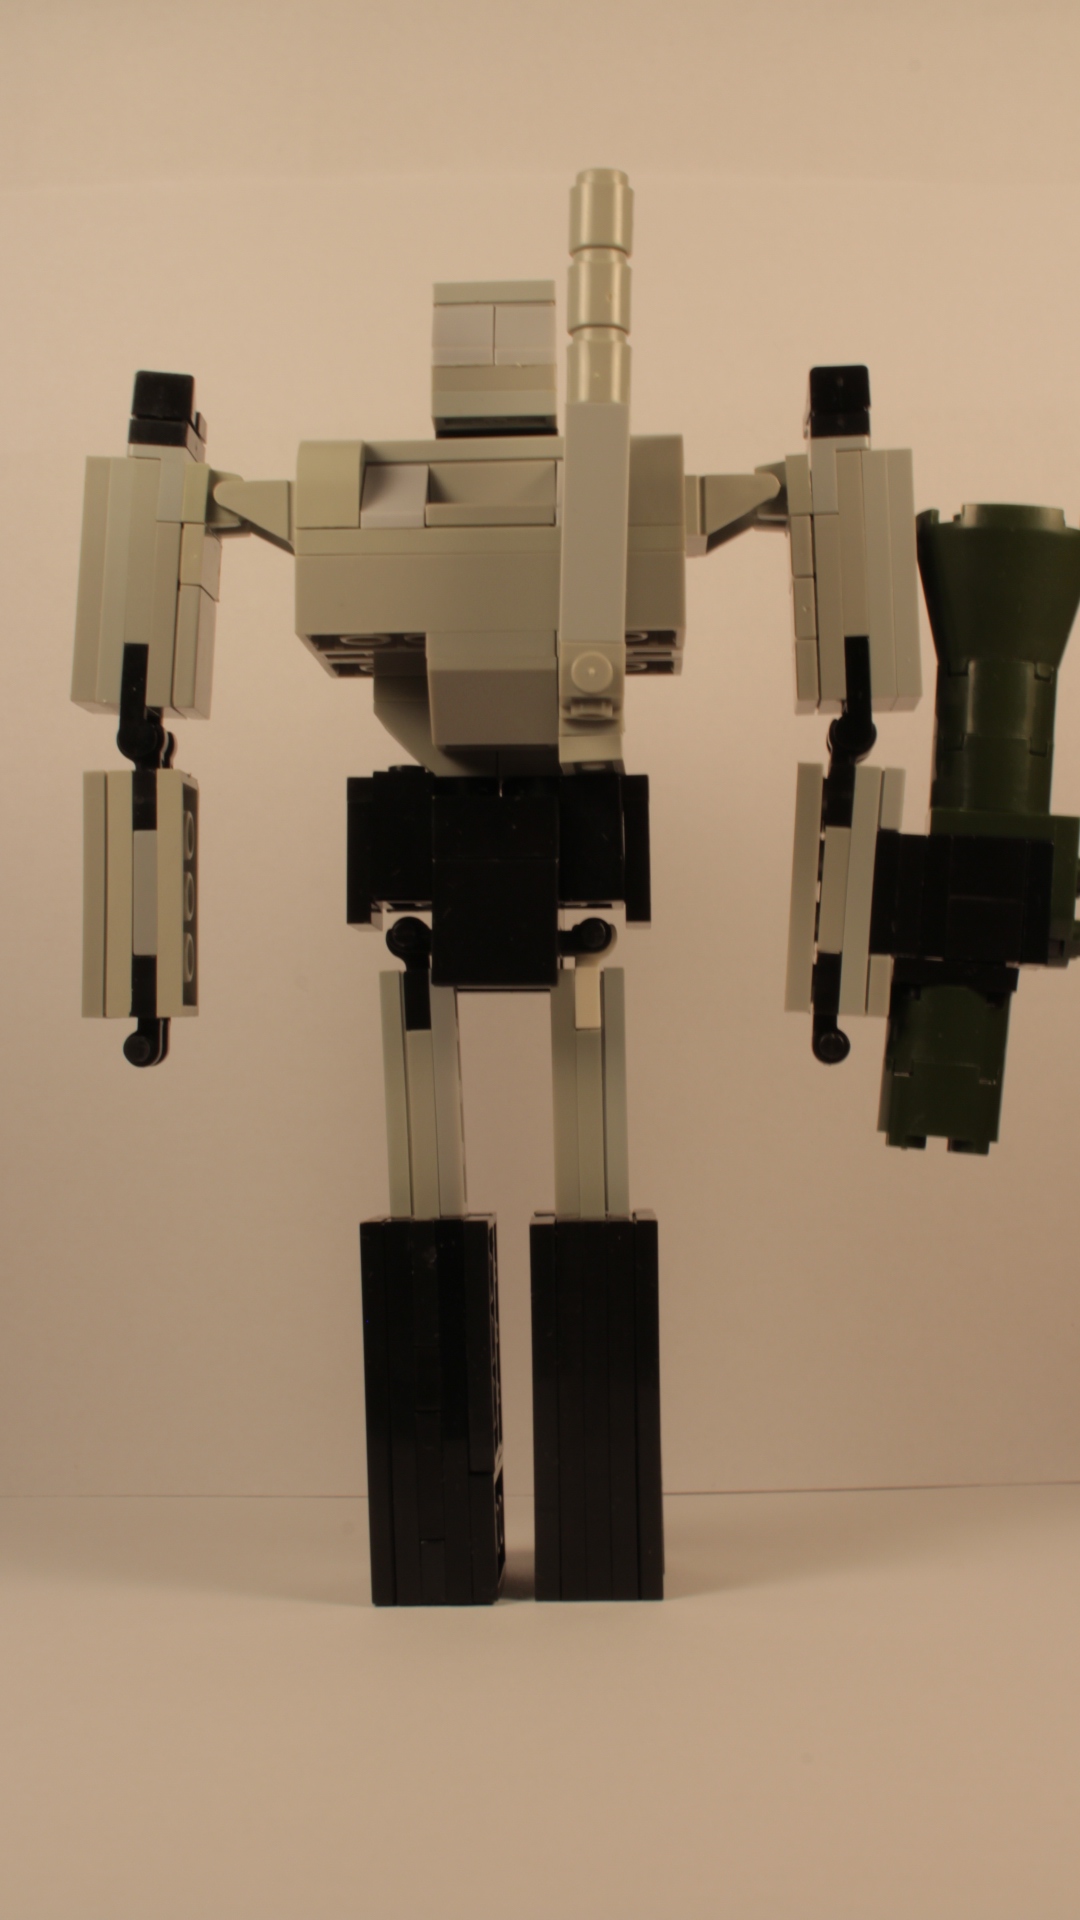 robots LEGO moc Transformers First Generation g1 lord megatron